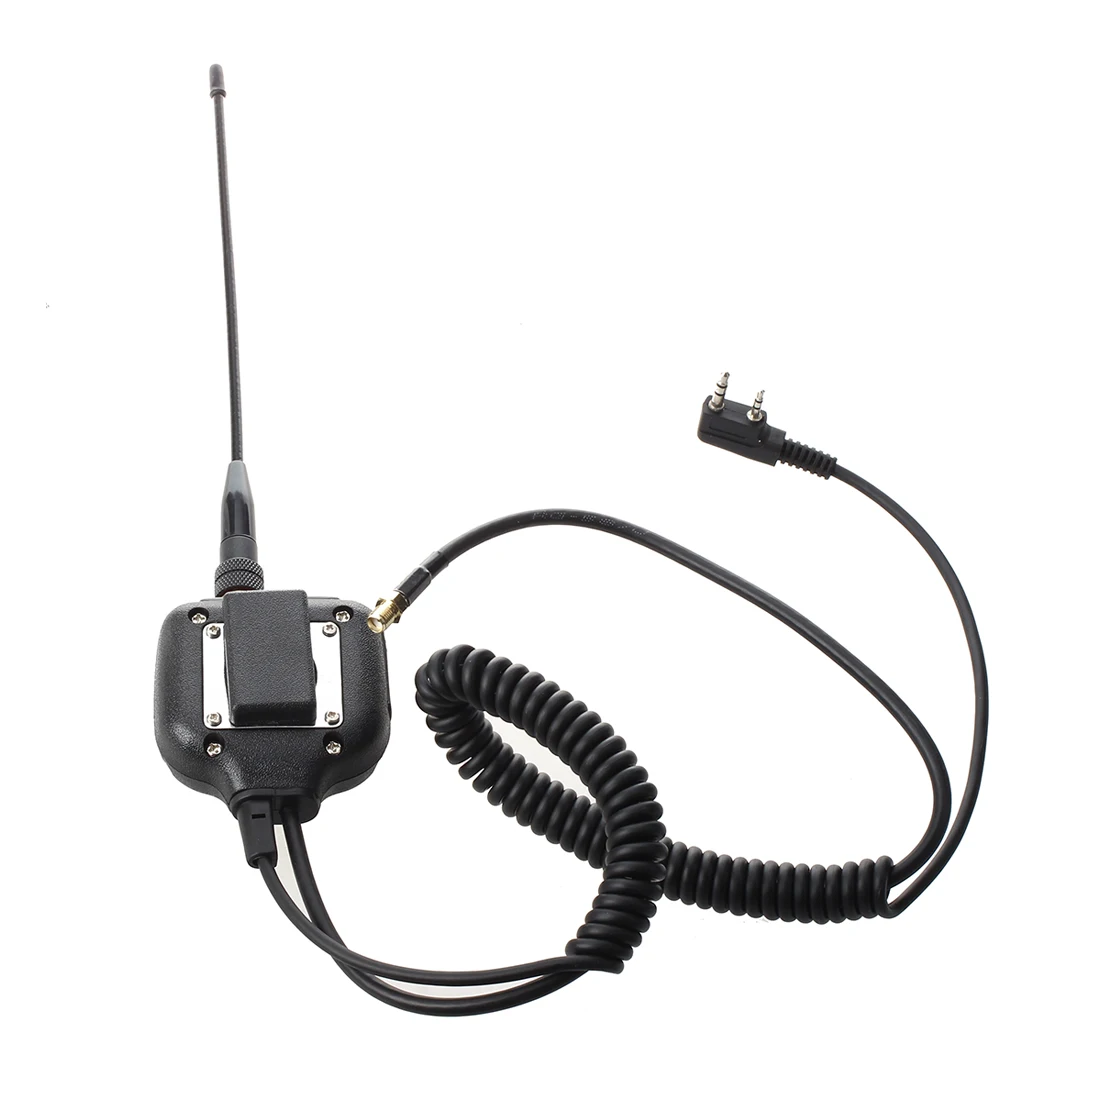 UHF VHF двухсторонний радио динамик miniphone с SMA разъем антенны, радио динамик s, портативный радио динамик s